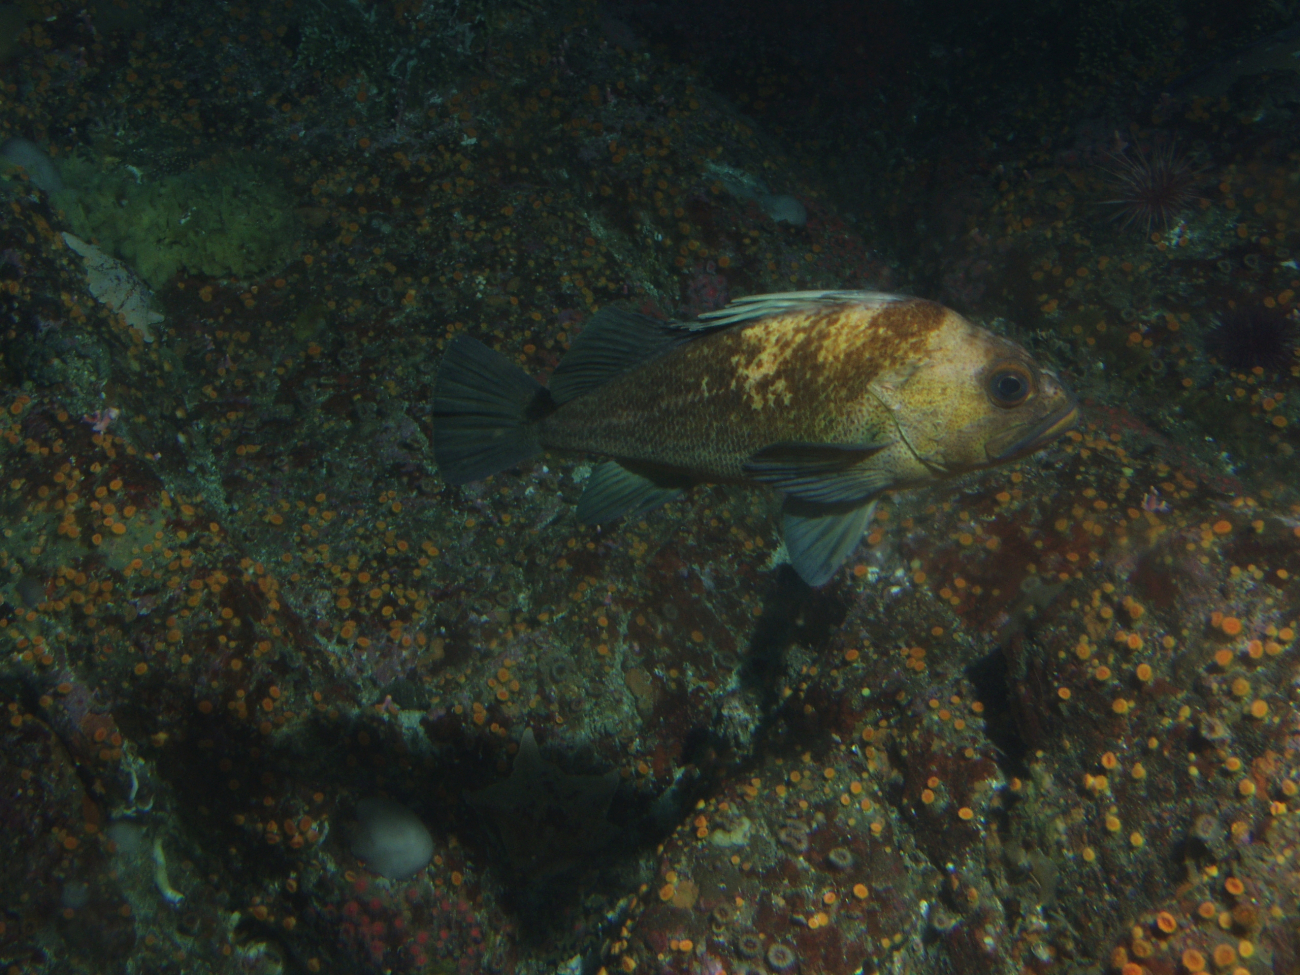 Quillback rockfish (Sebastes maliger) in rocky reef habitat up closeat 25 meters depth